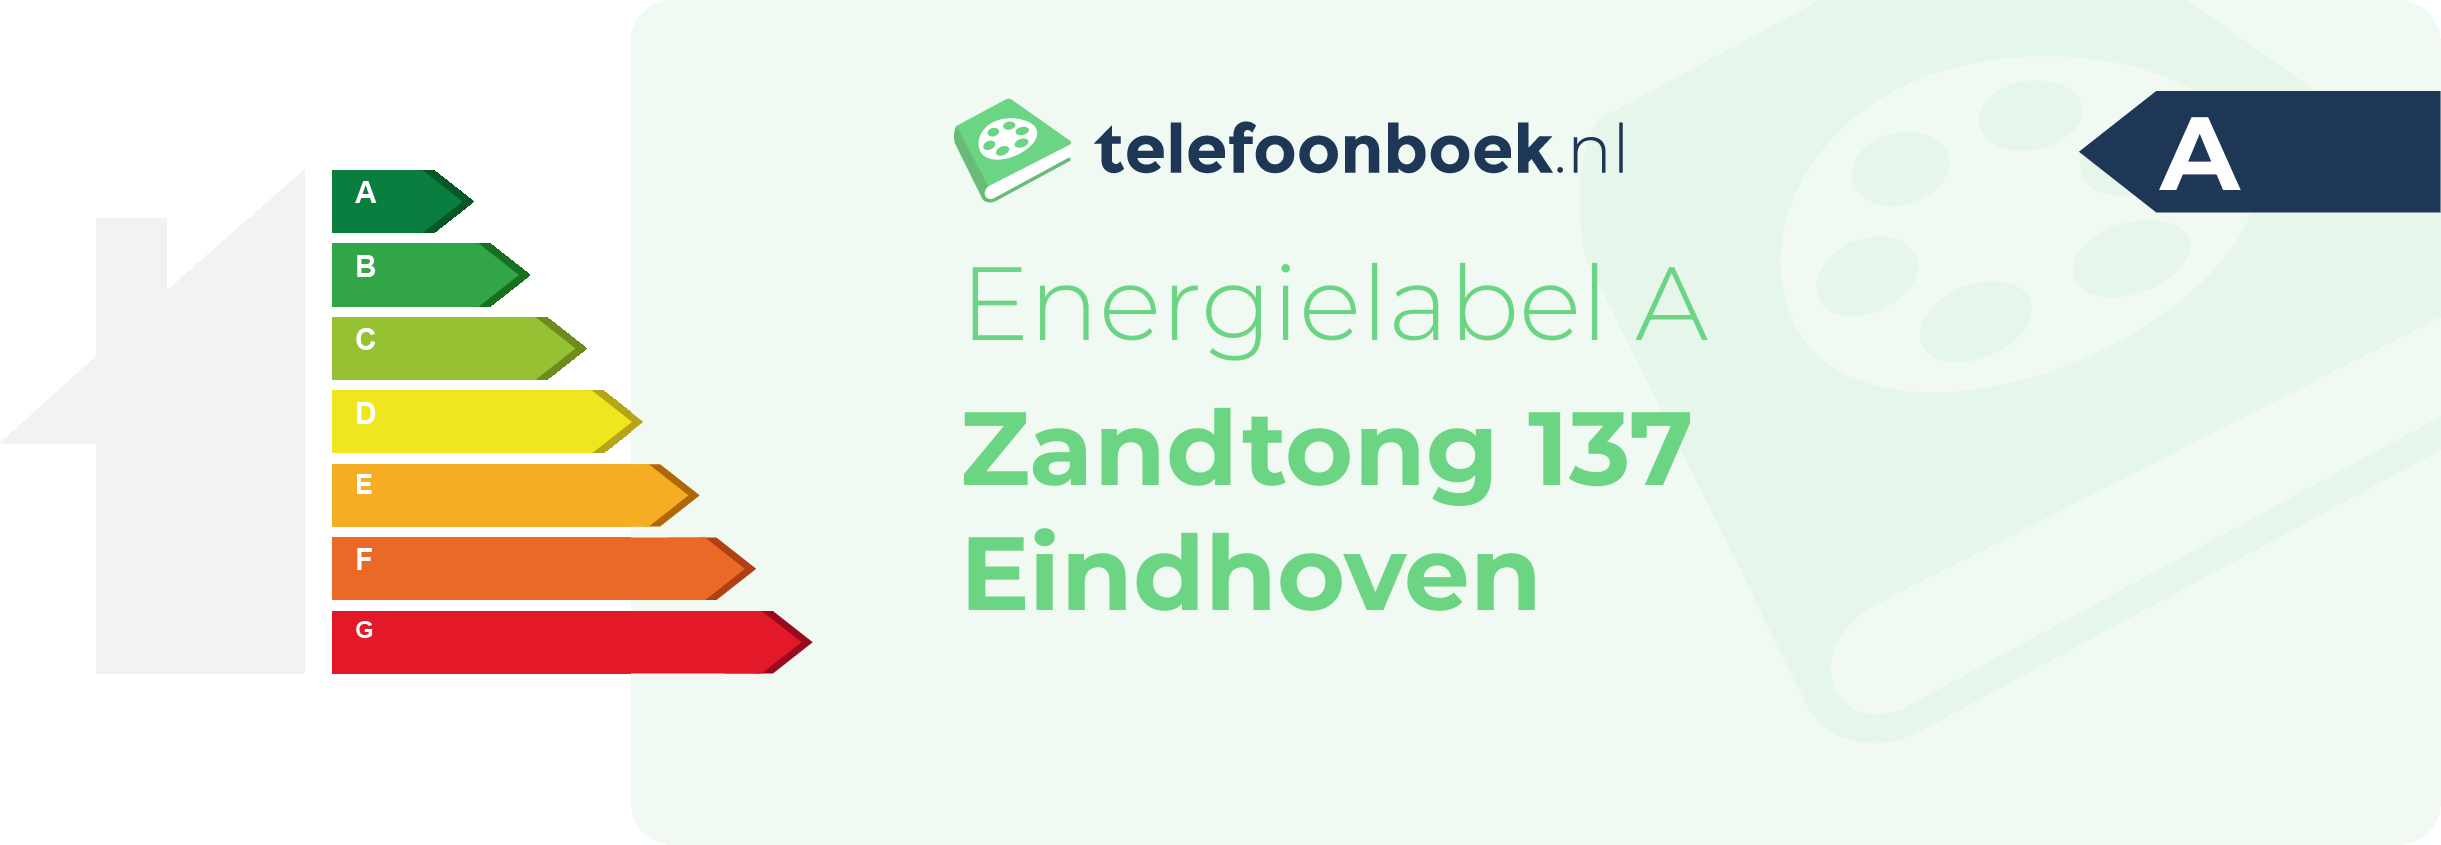 Energielabel Zandtong 137 Eindhoven